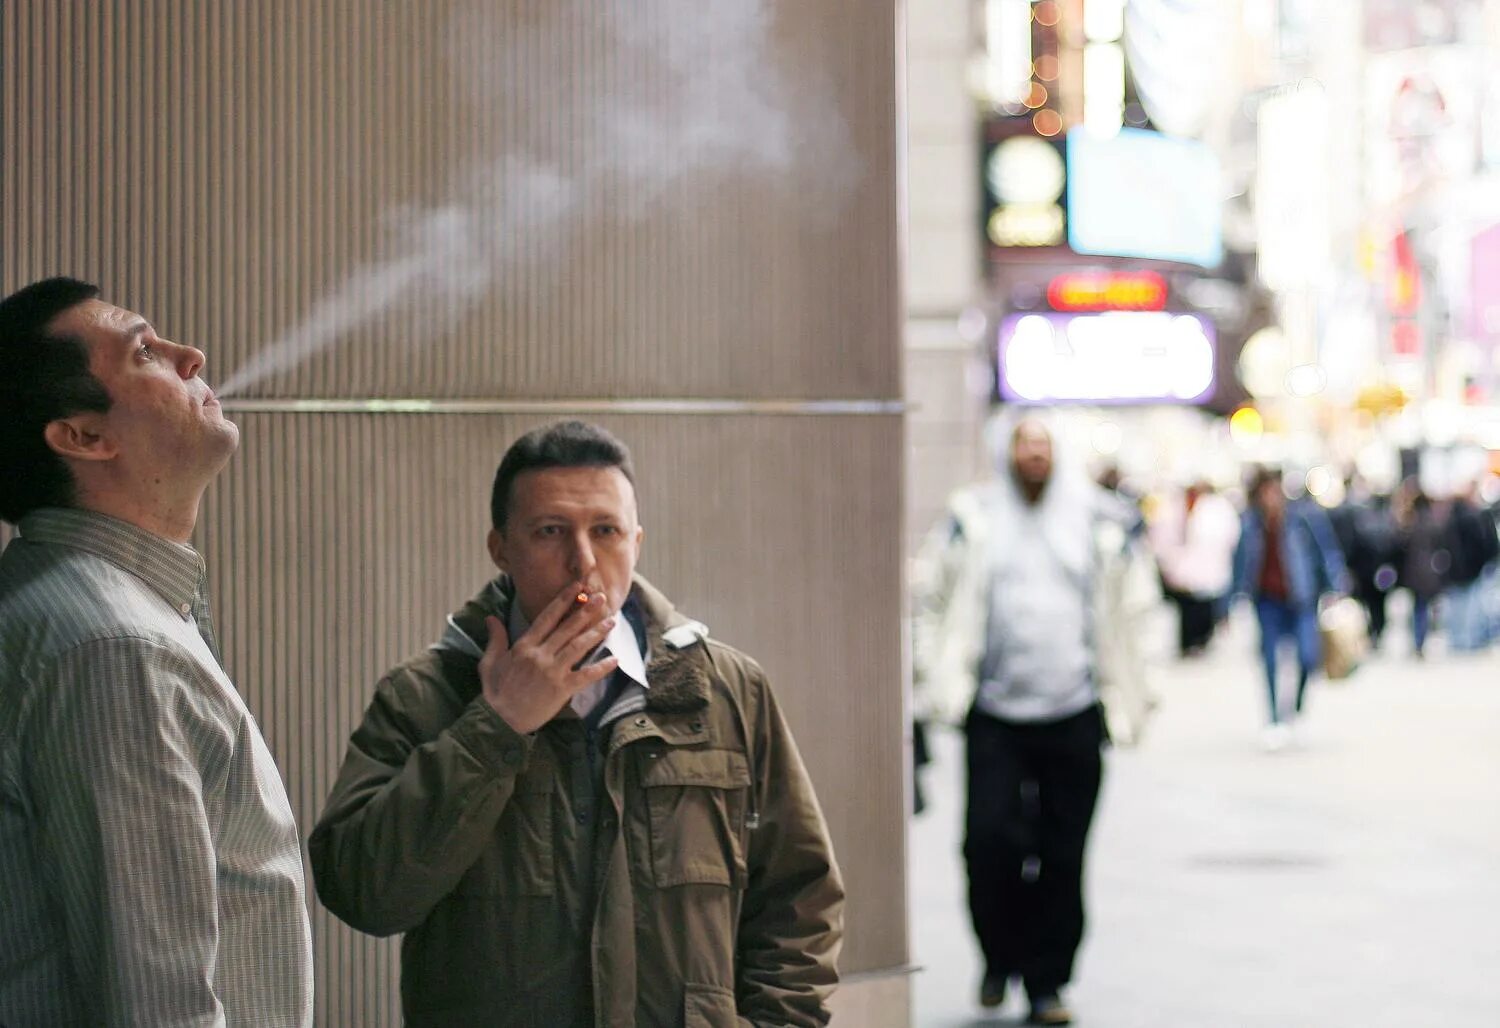 Lost курилка. Курящий человек на улице. Люди в курилке. Мужчина курит ну улице. Человек с сигаретой на улице.